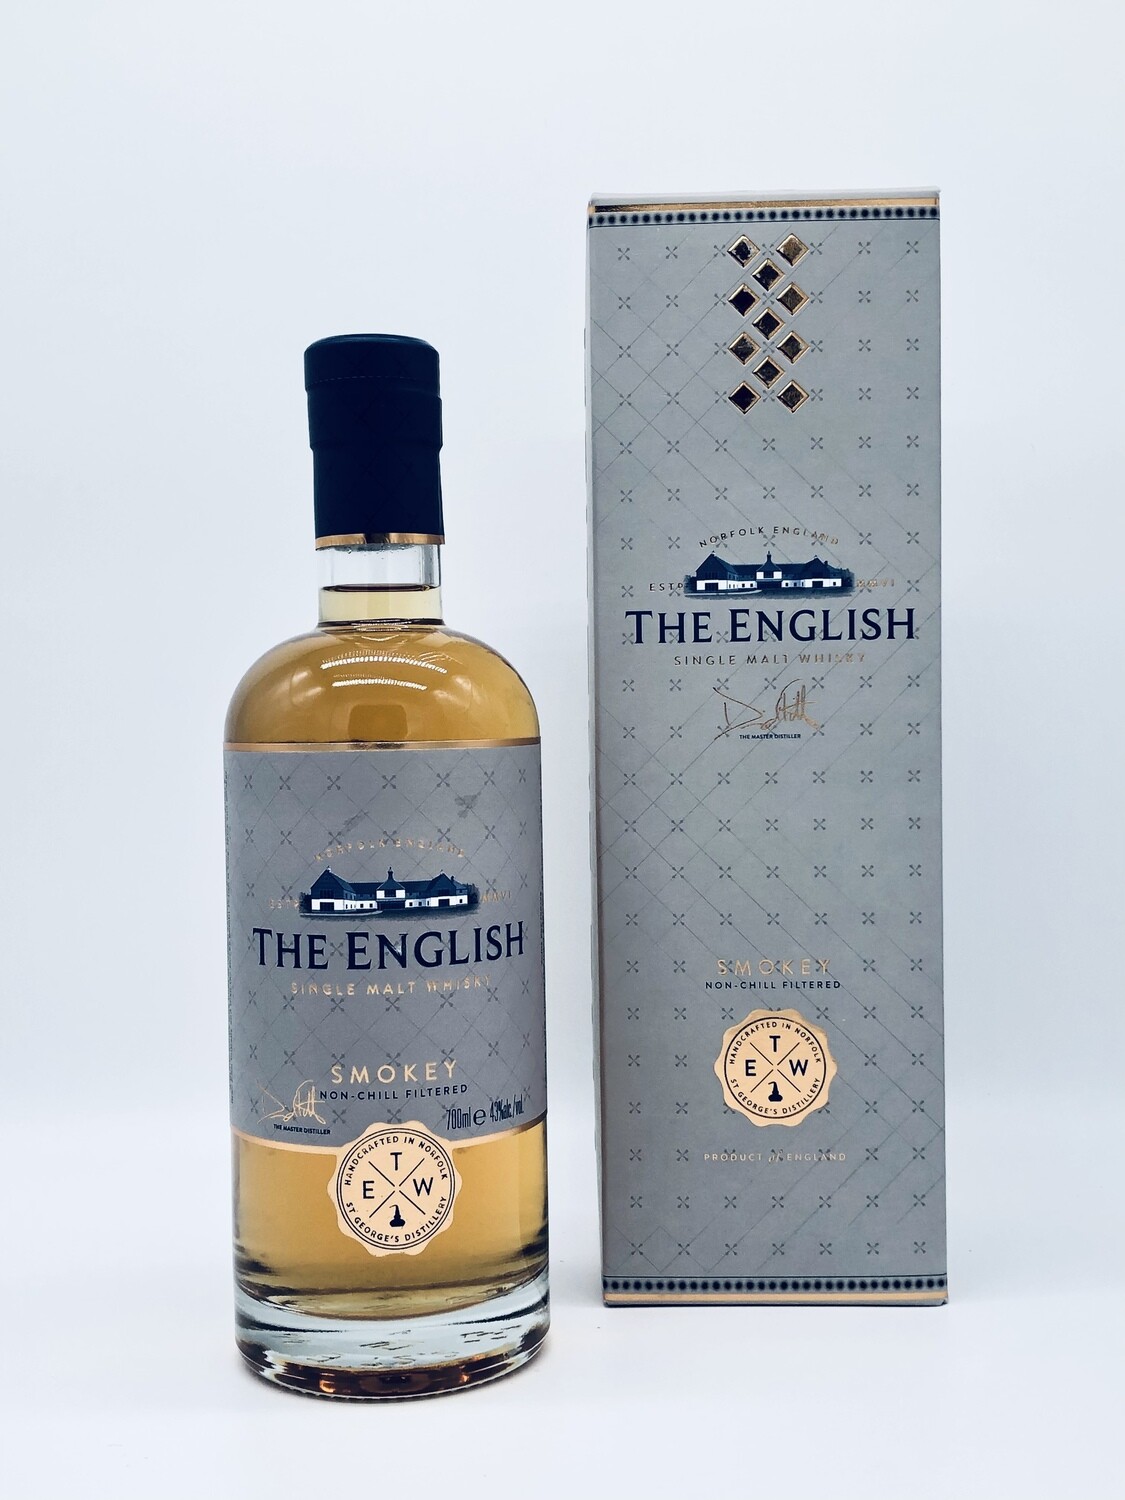 The English whisky Smokey